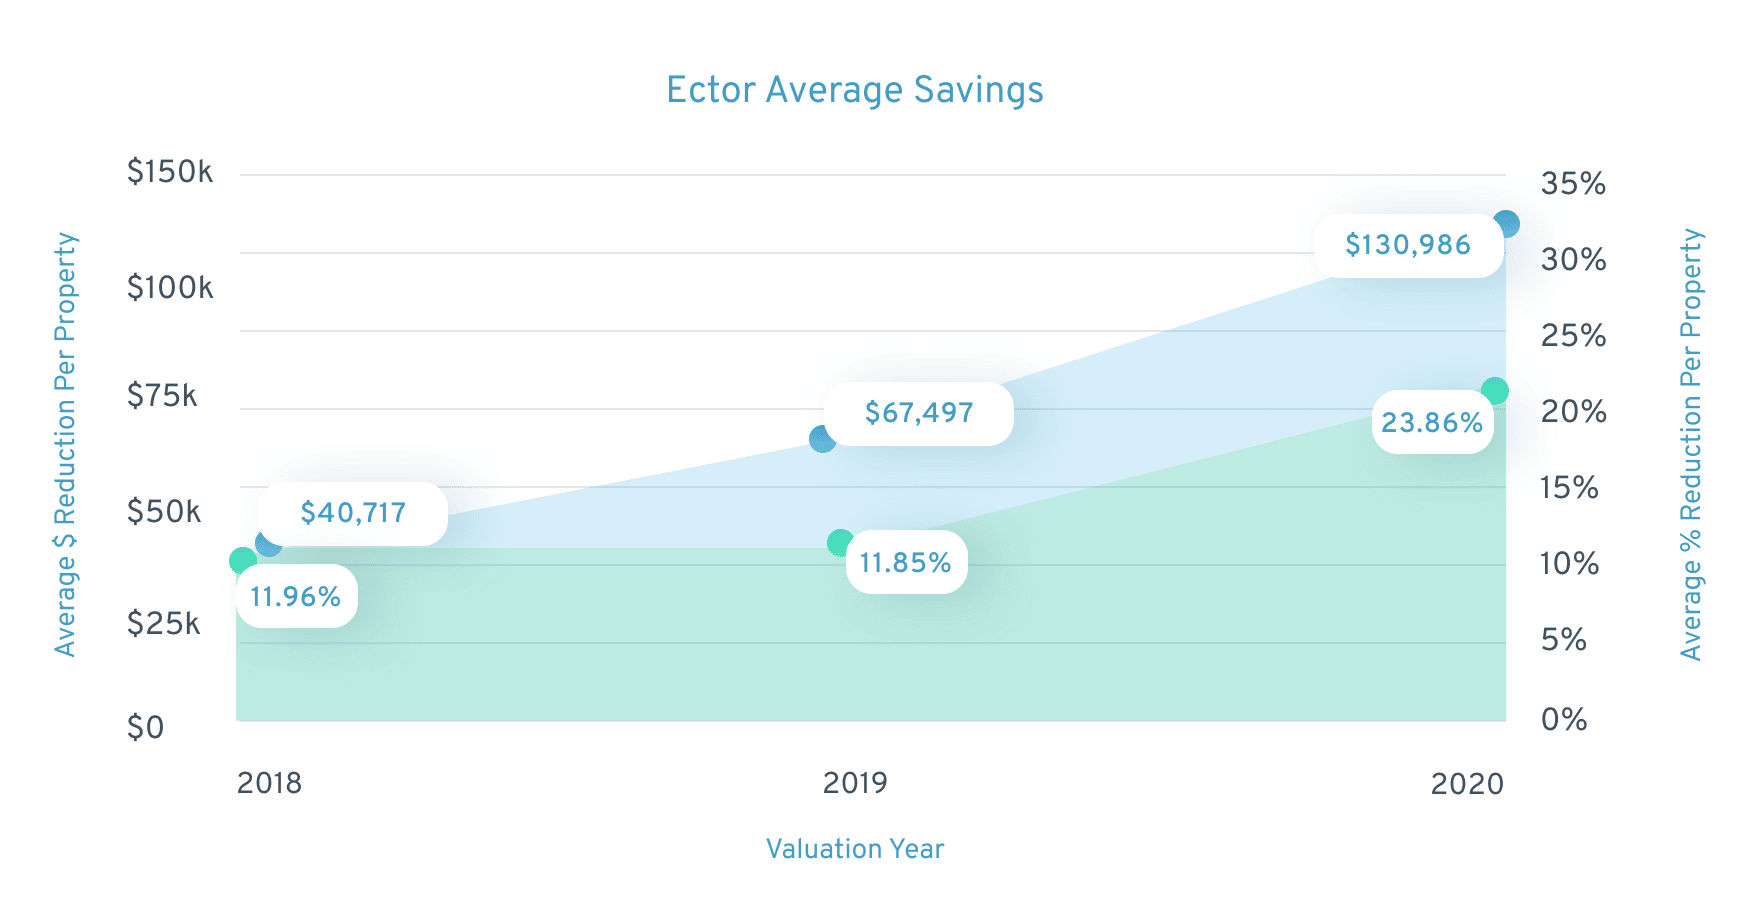 Ector county property tax average savings